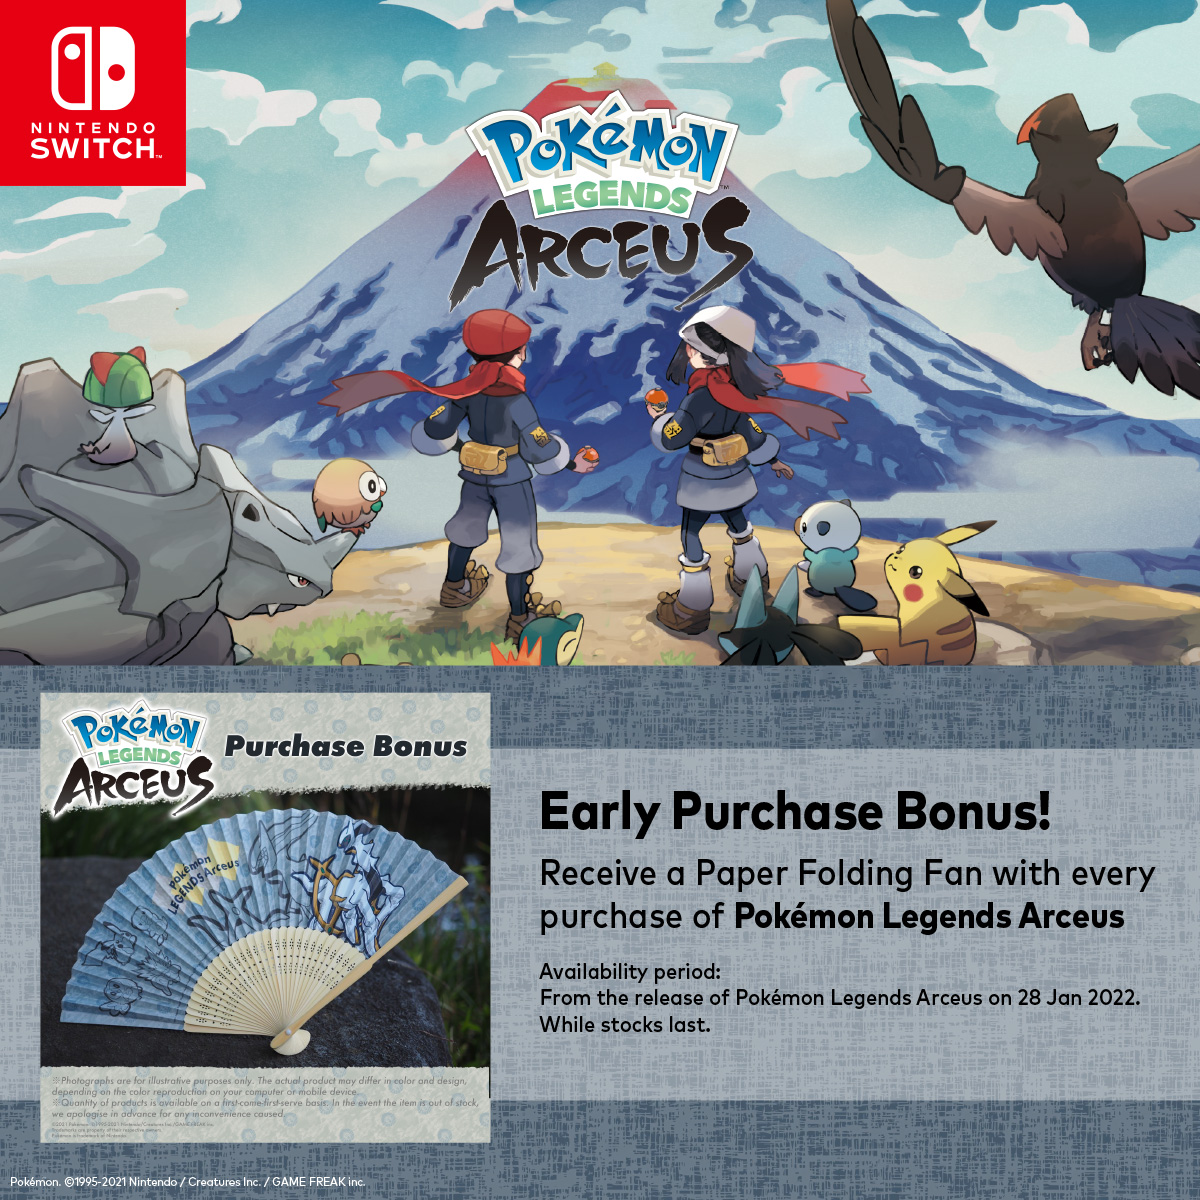 Pokémon Legends: Arceus, Critical Consensus